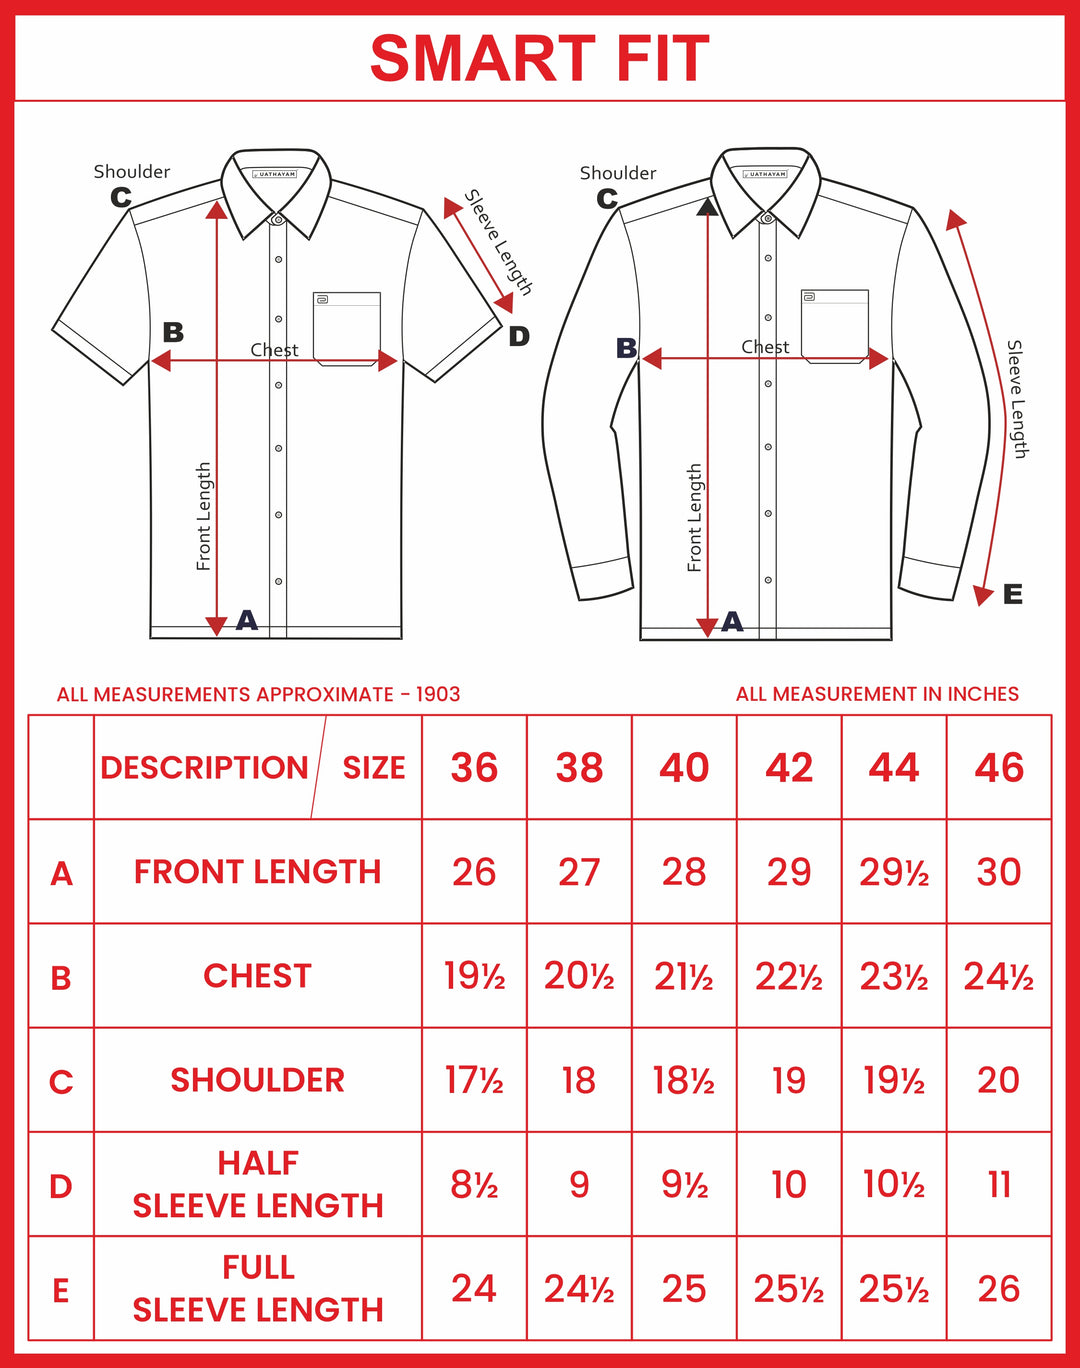 Ariser Linen Feel Solid Cotton Rich Smart Fit Full Sleeve Shirt for Men - LF2013